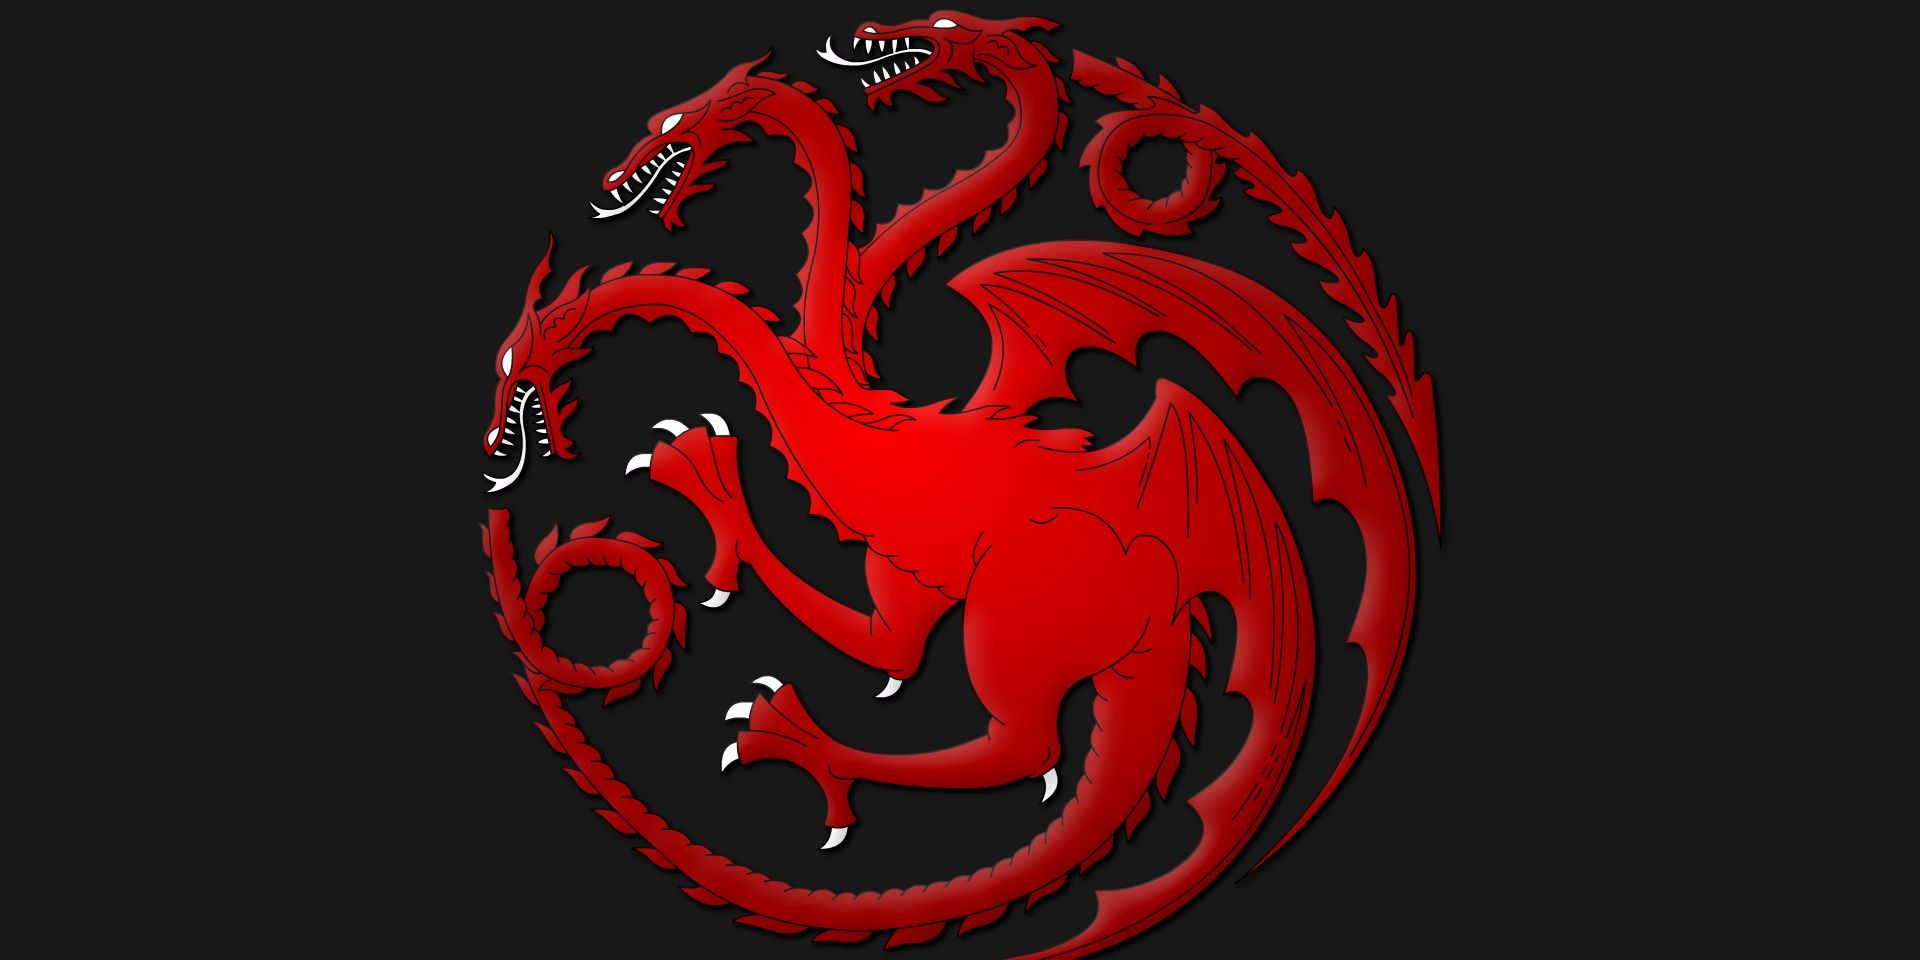 House Targaryen's sigil -- a three headed red dragon against a field of black.